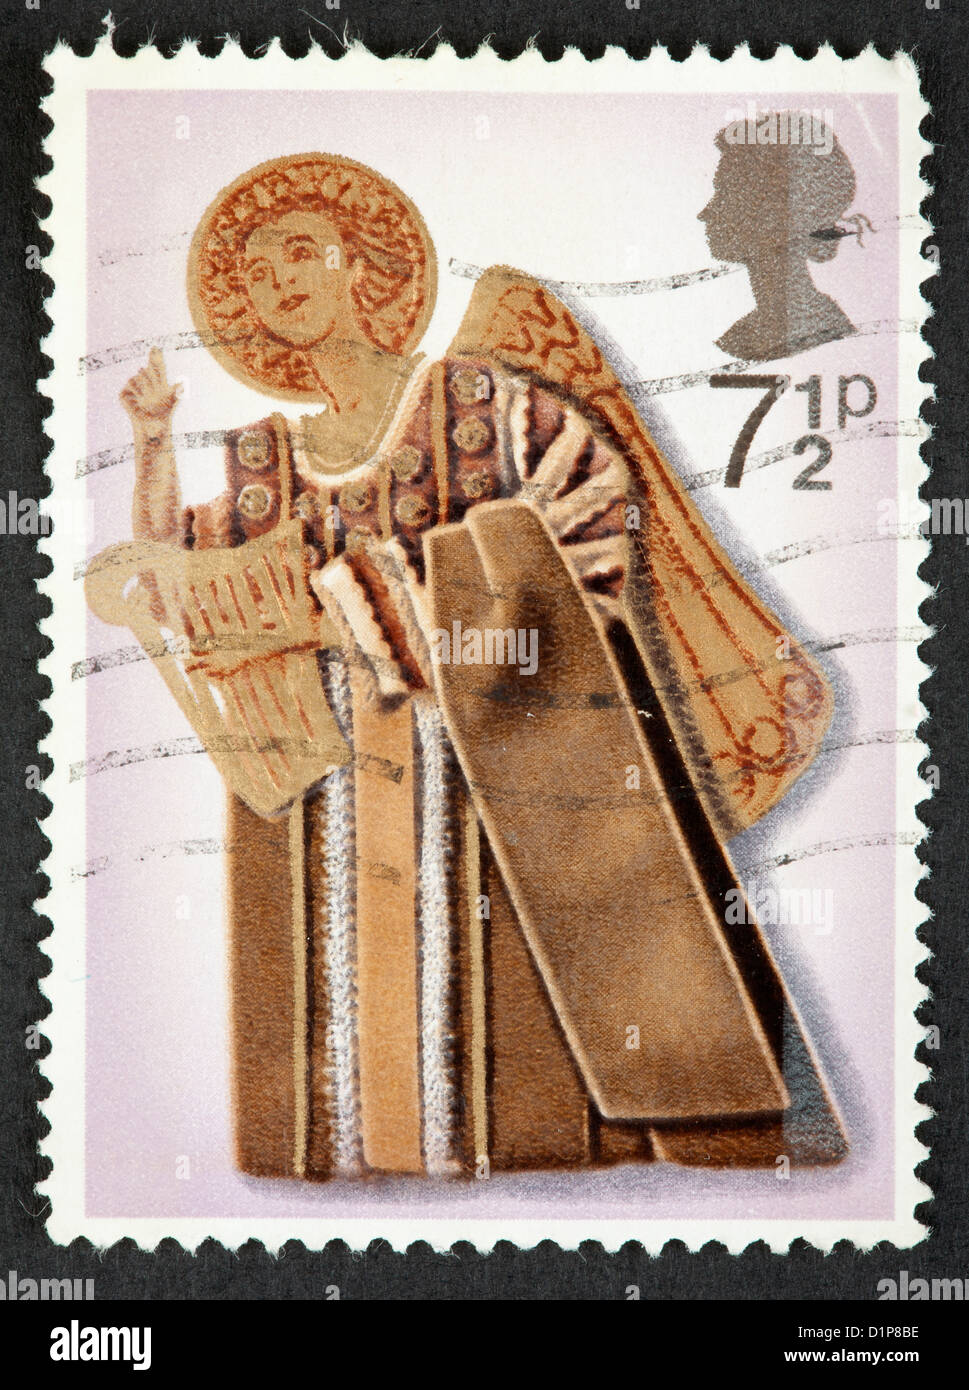 British postage stamp Stock Photo